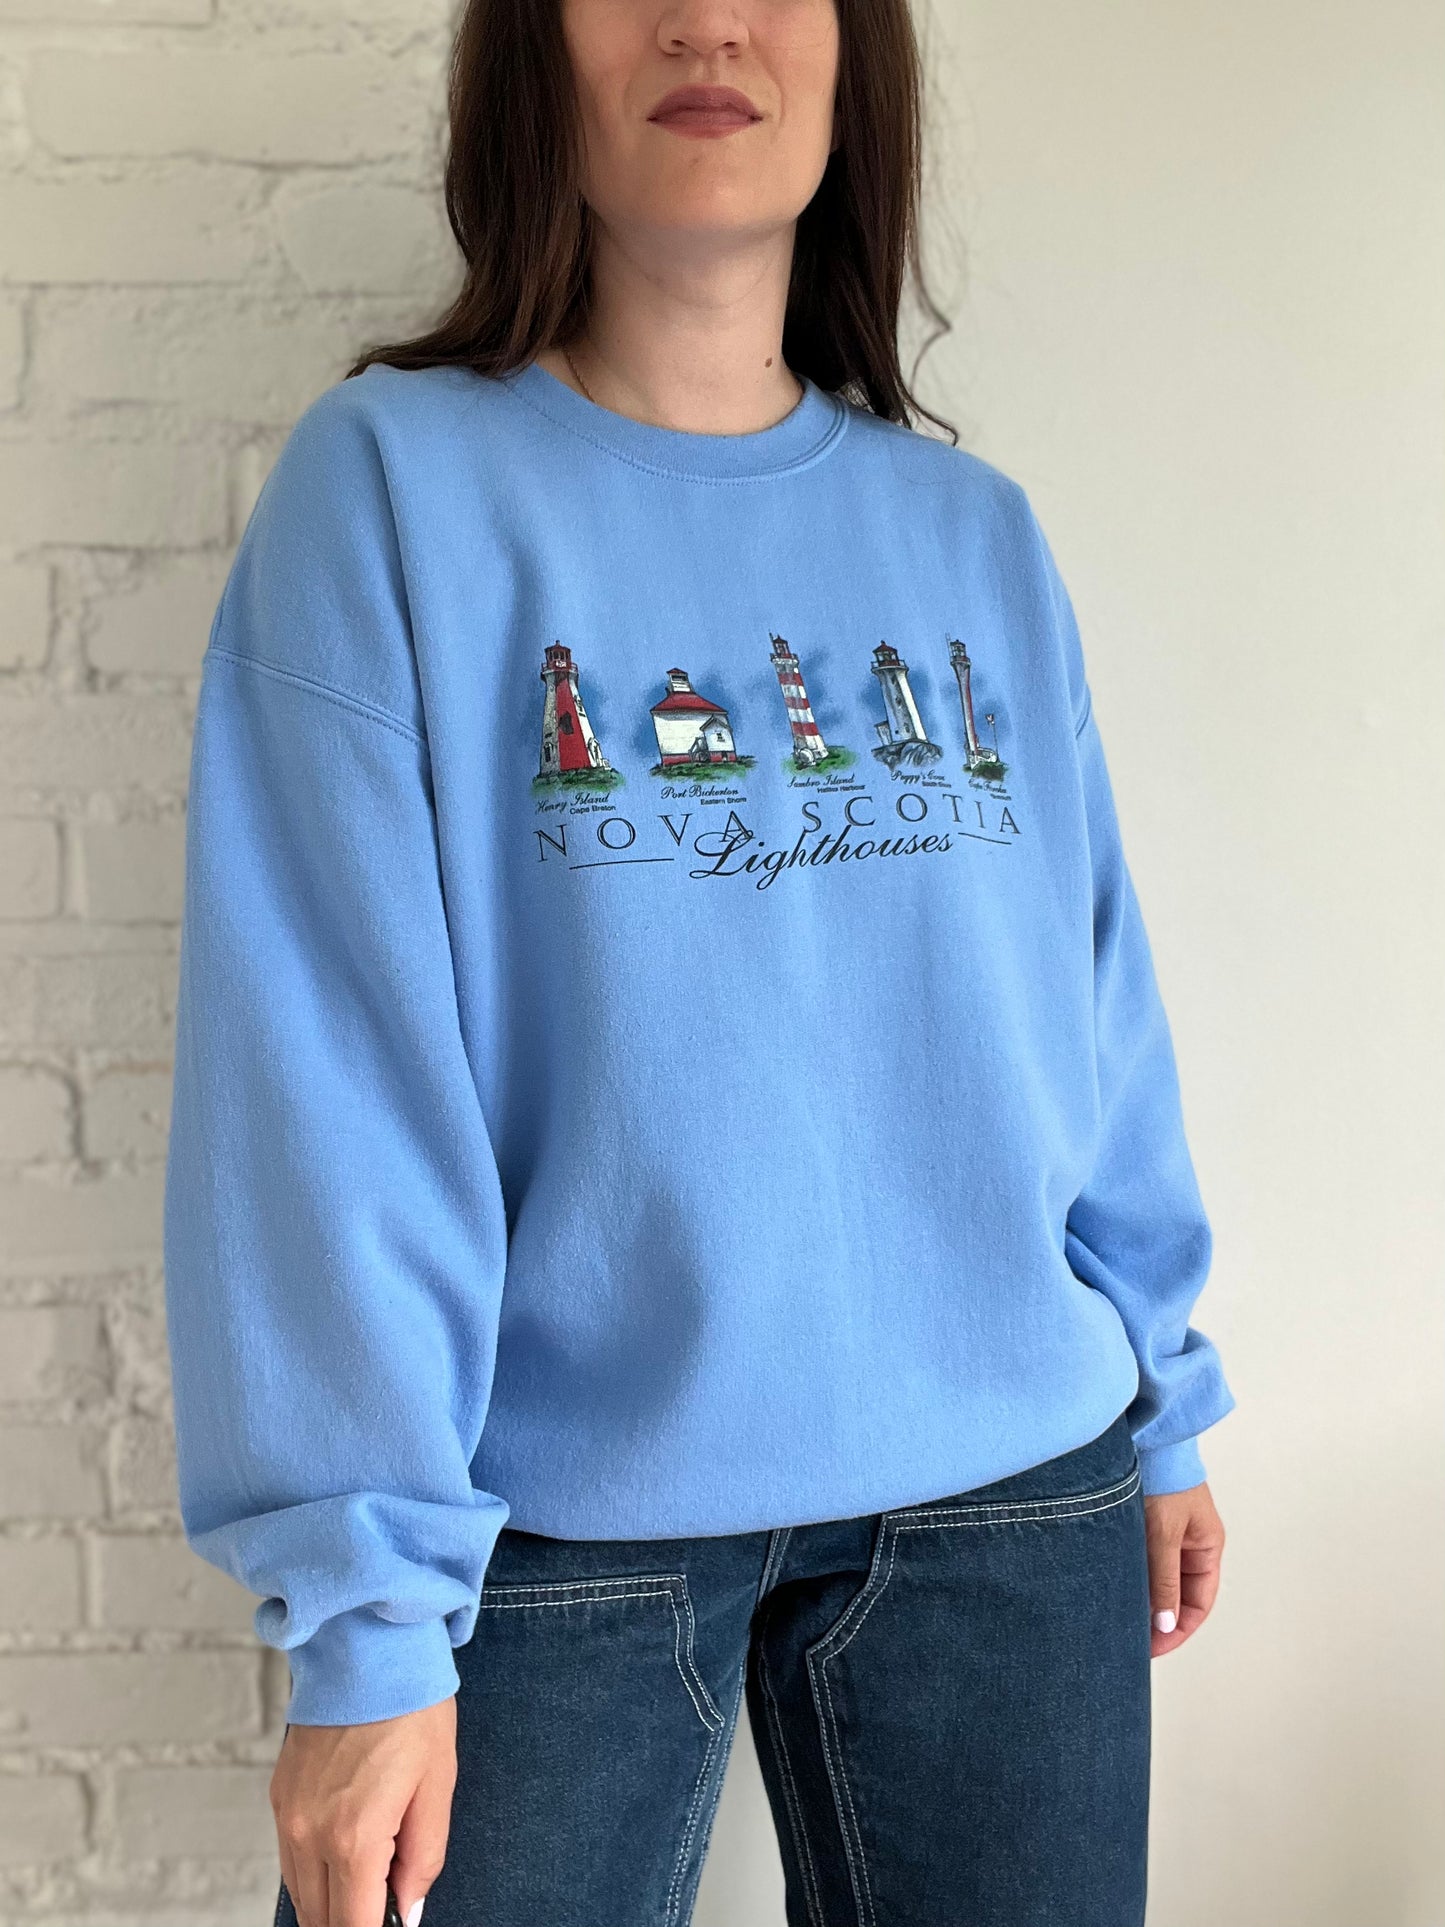 Nova Scotia Lighthouses Sweater - XL